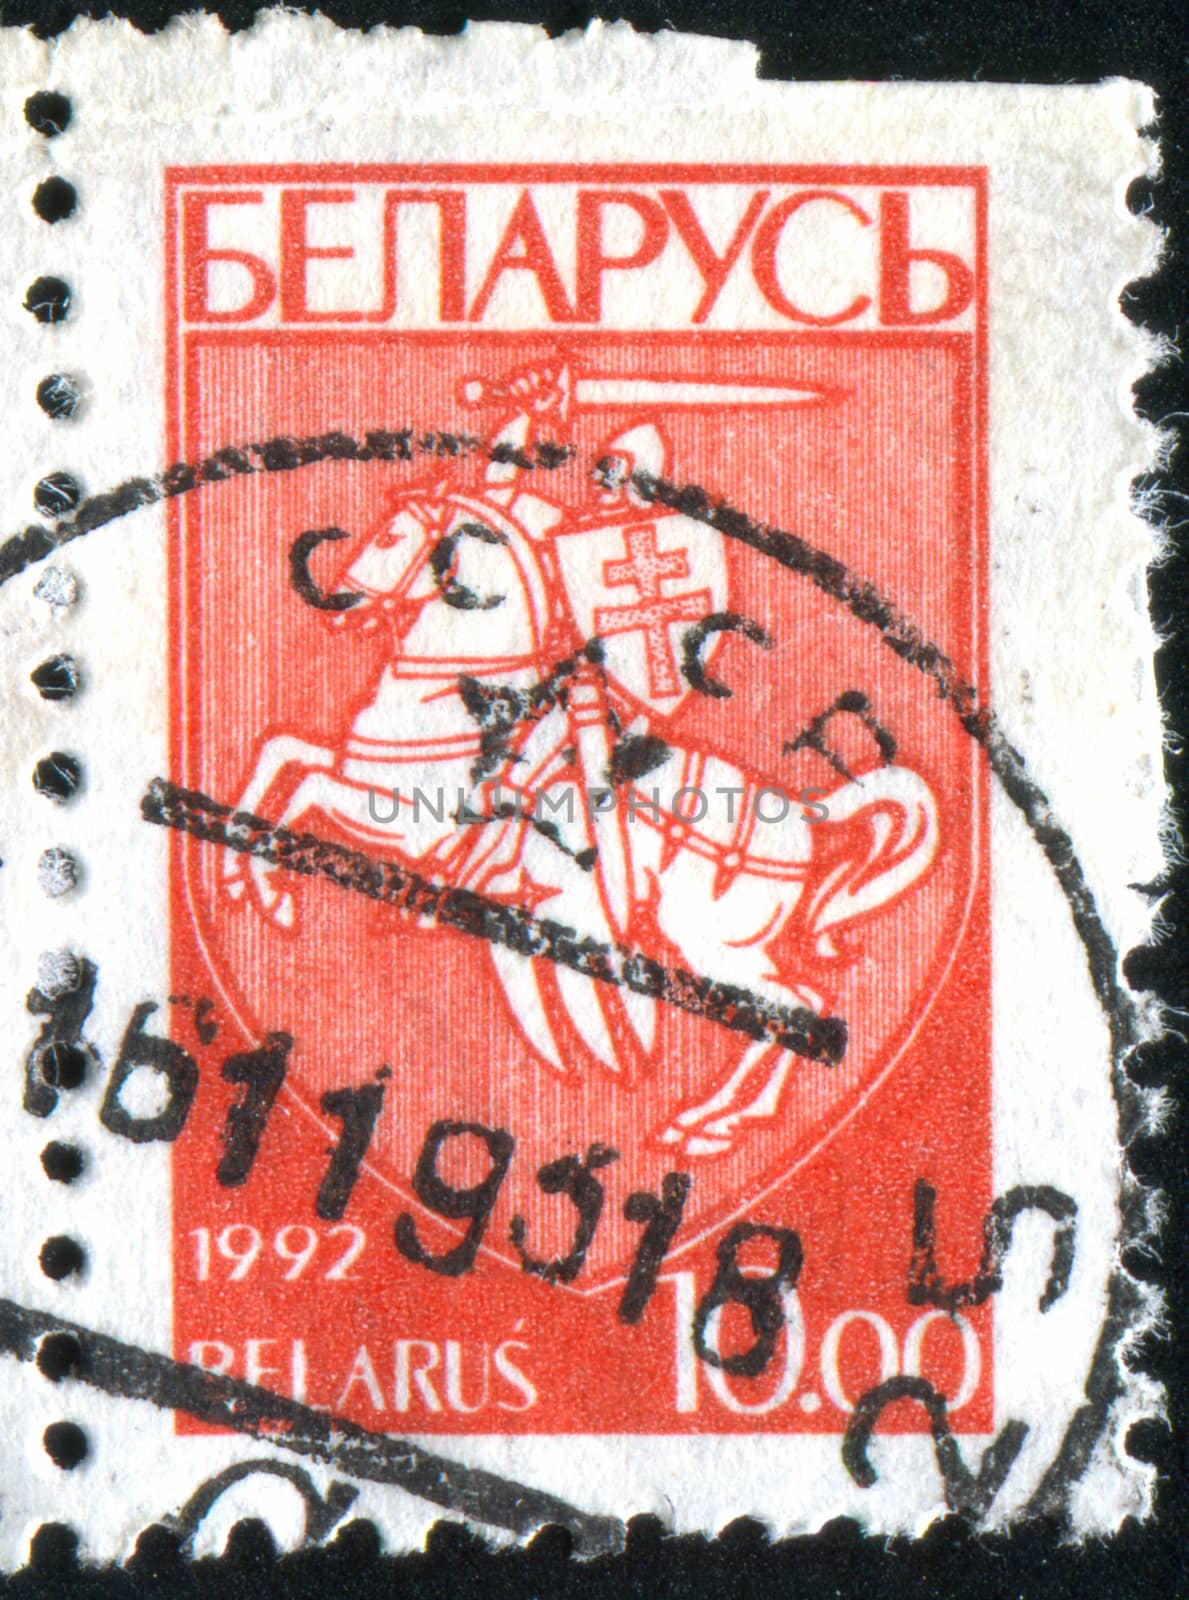 BELARUS - CIRCA 1992: stamp printed by Belarus, shows horse knight, circa 1992.